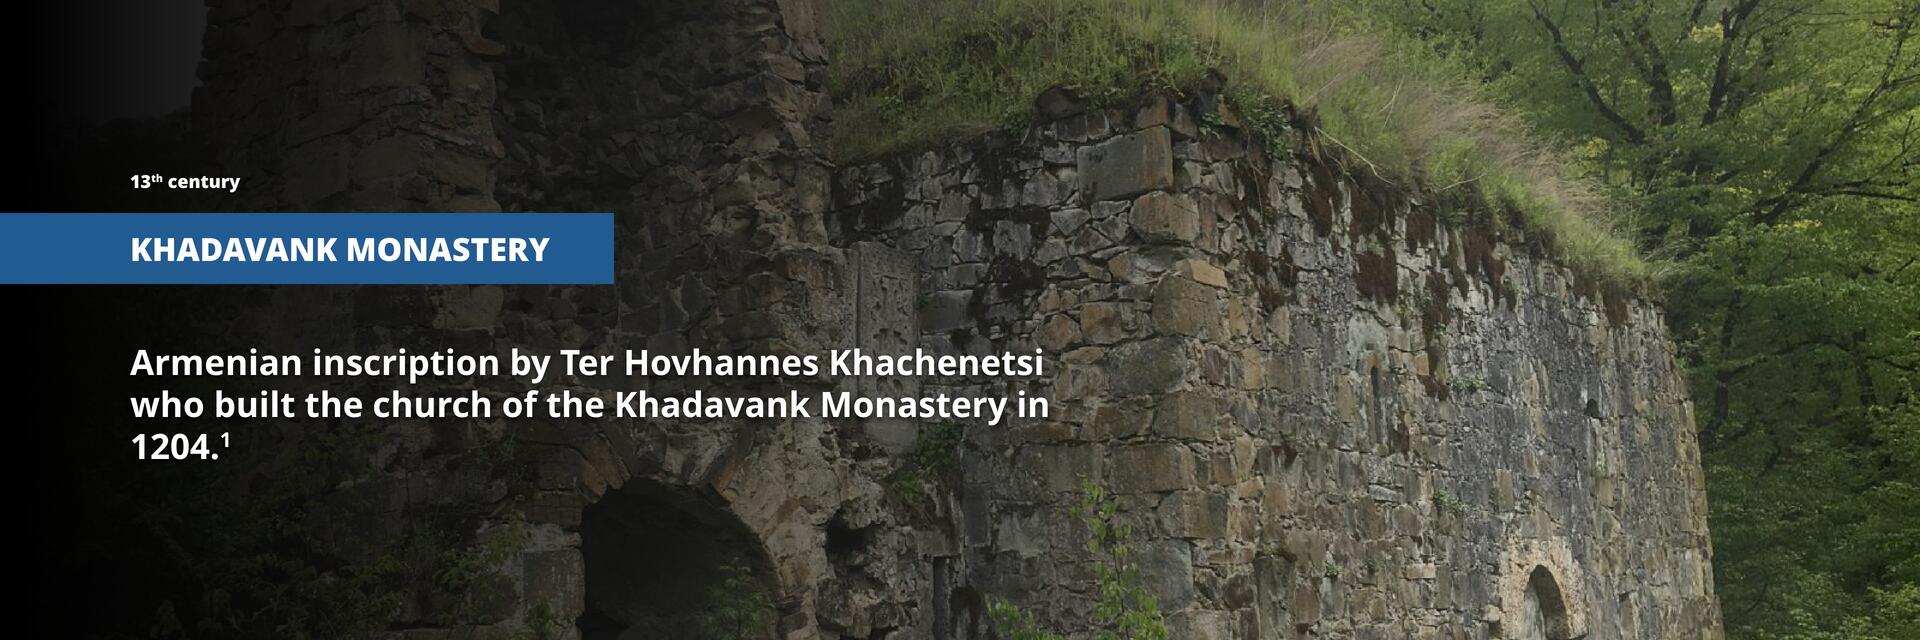 Khadavank Monastery